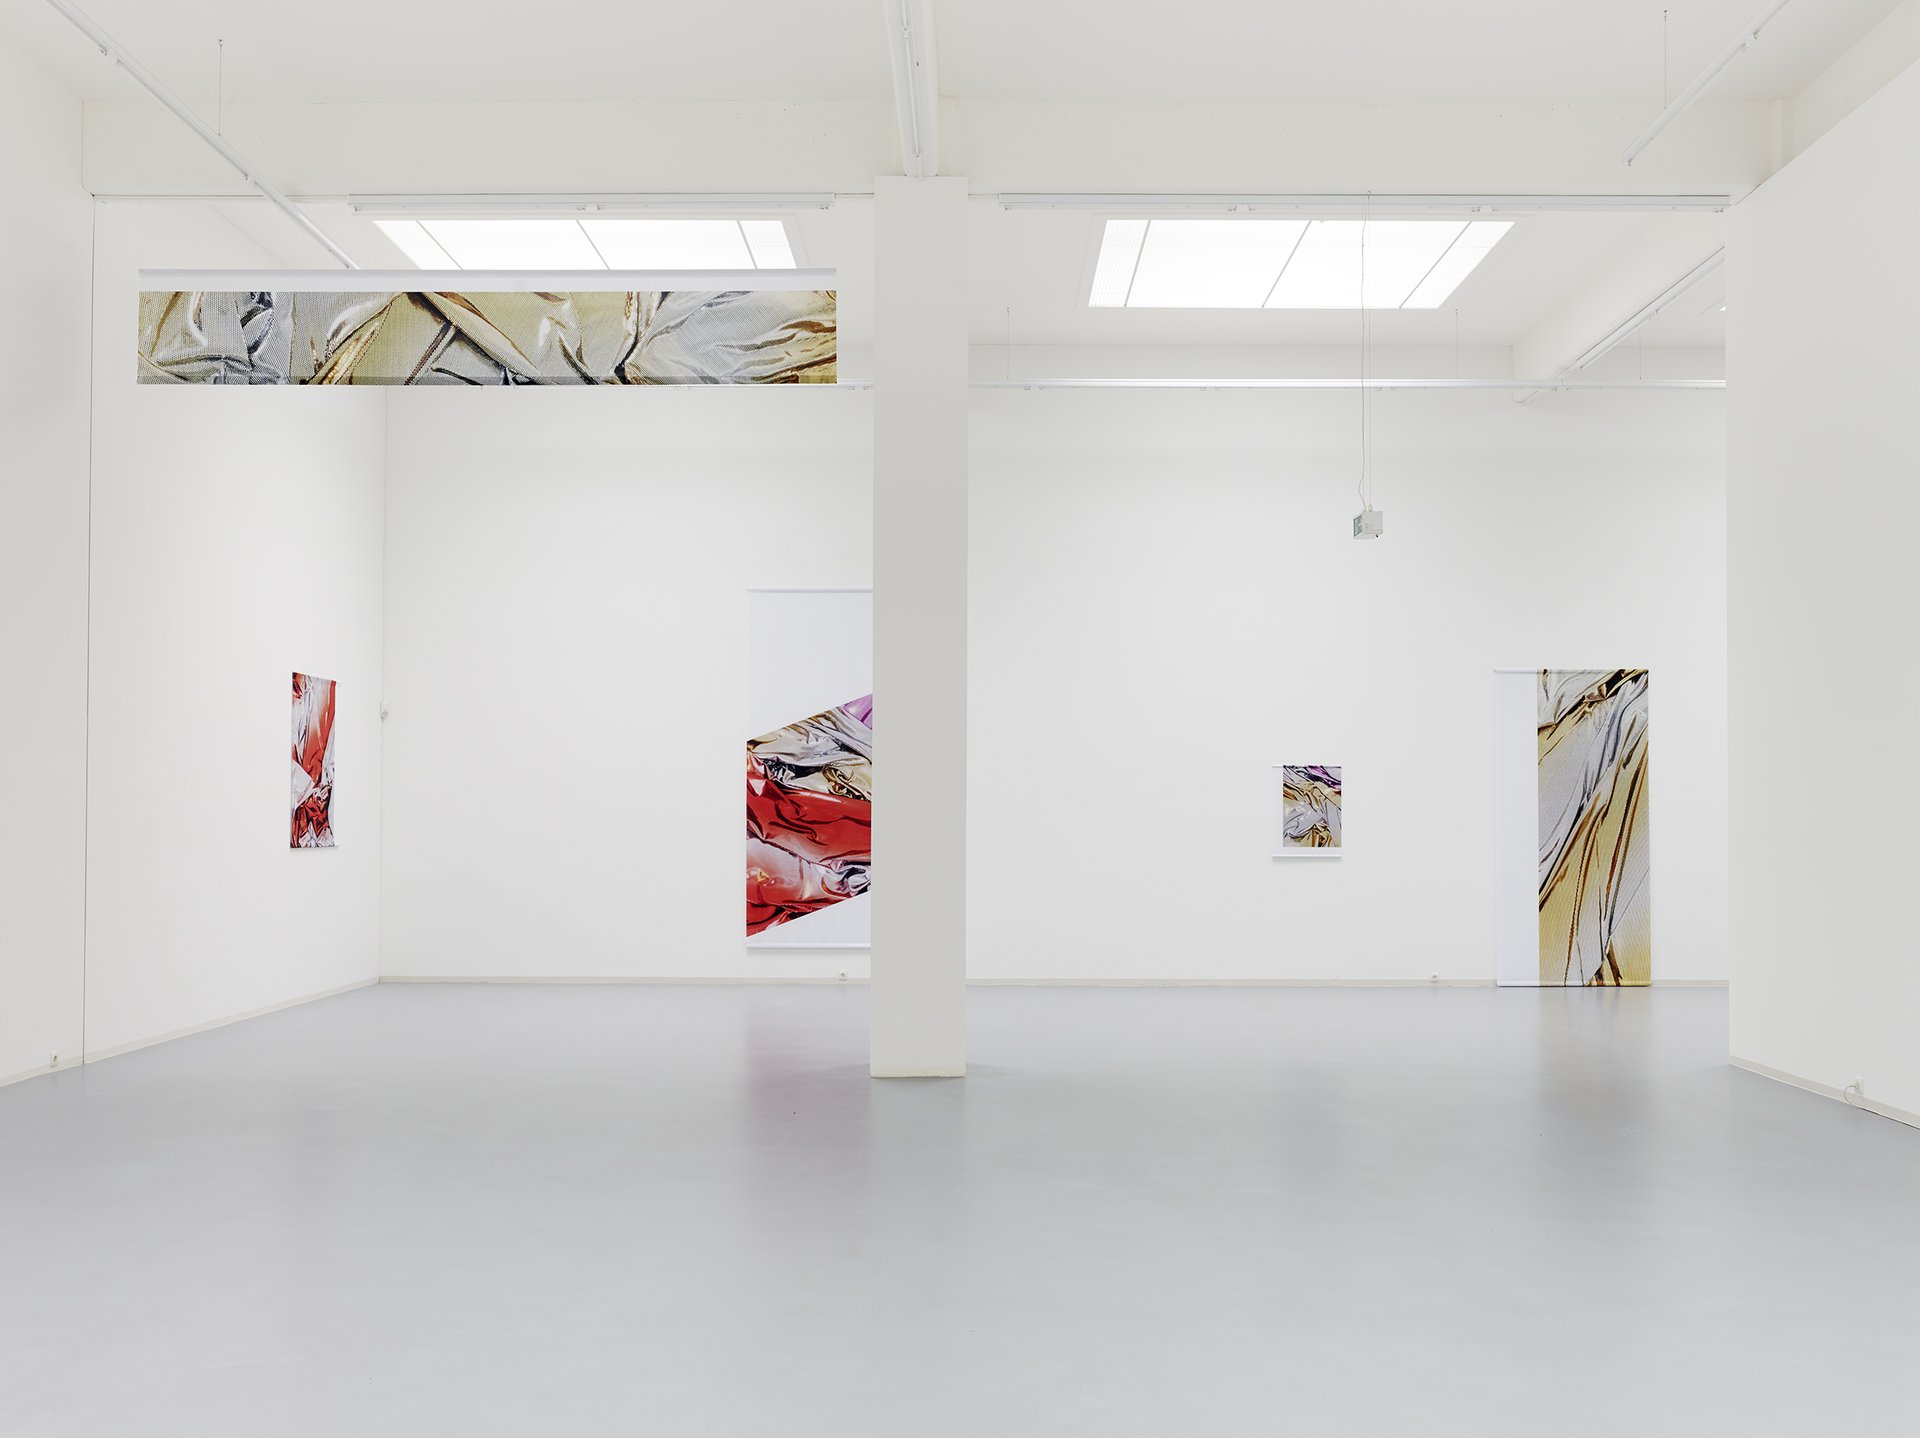 Anne Pöhlmann, installation view, 2014, Bonner Kunstverein, Courtesy the artist and Clages, Cologne. Photo: Simon Vogel